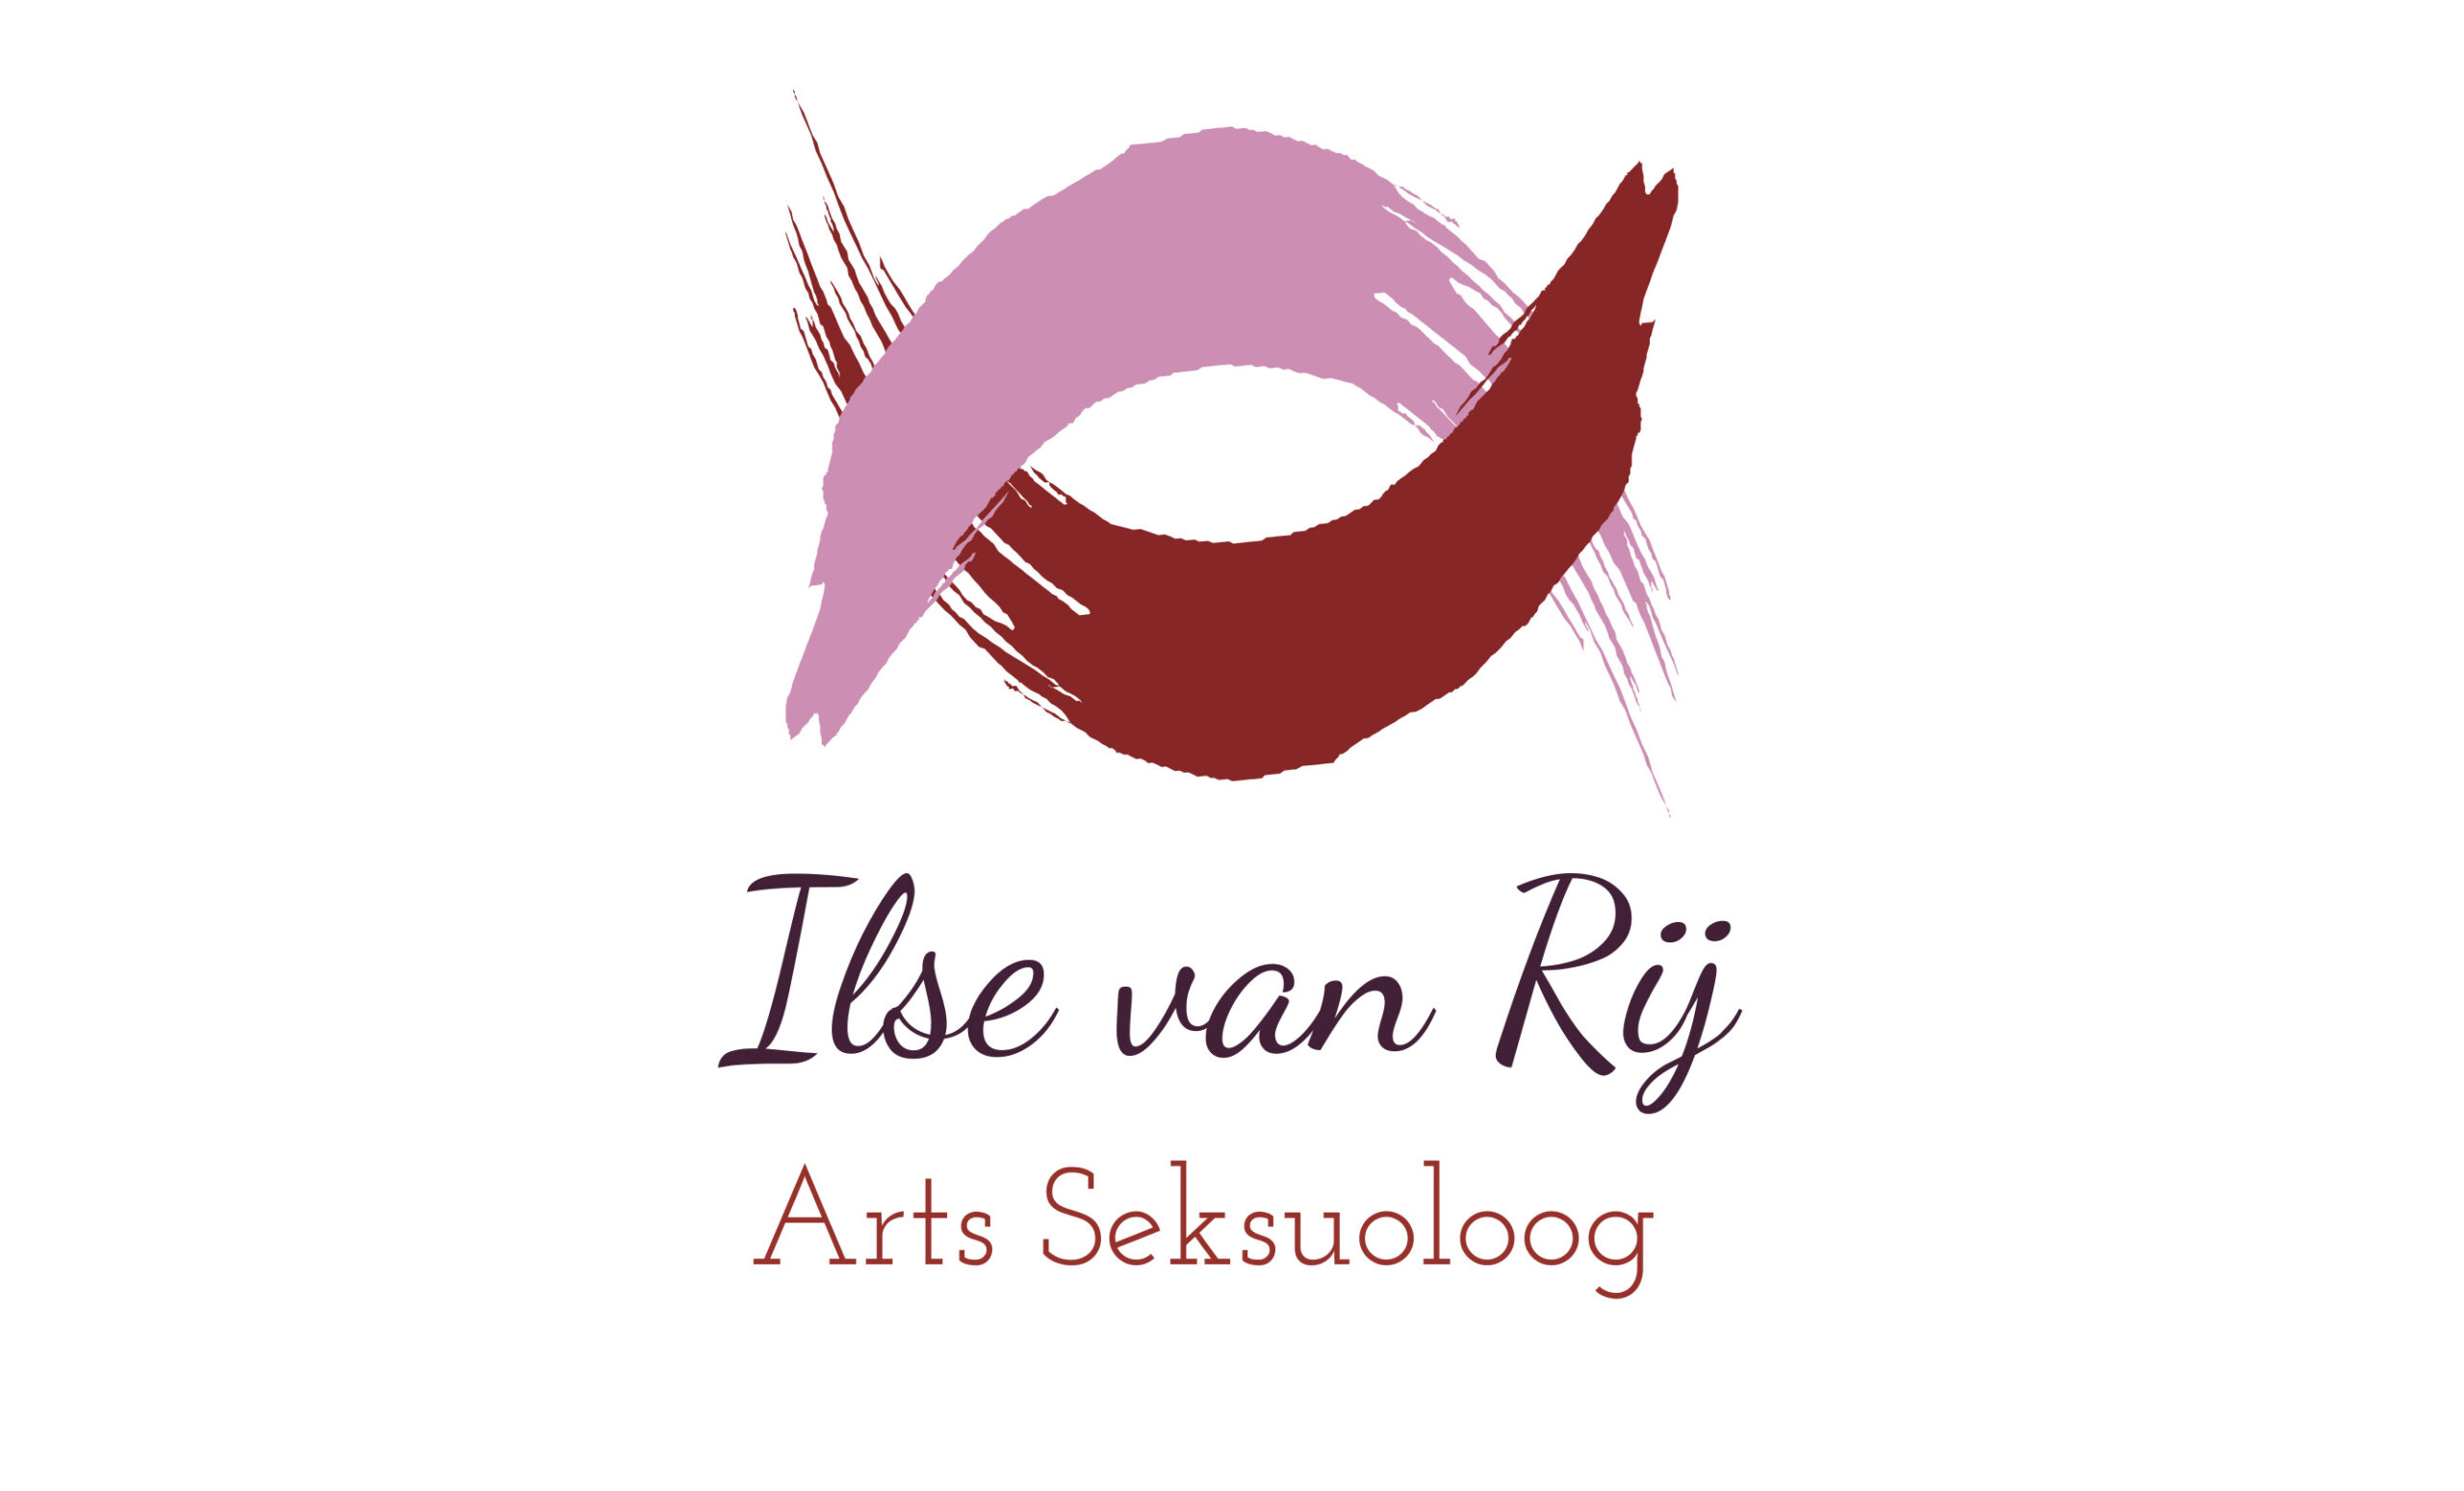 Seksuologie praktijk Ilse van Rij